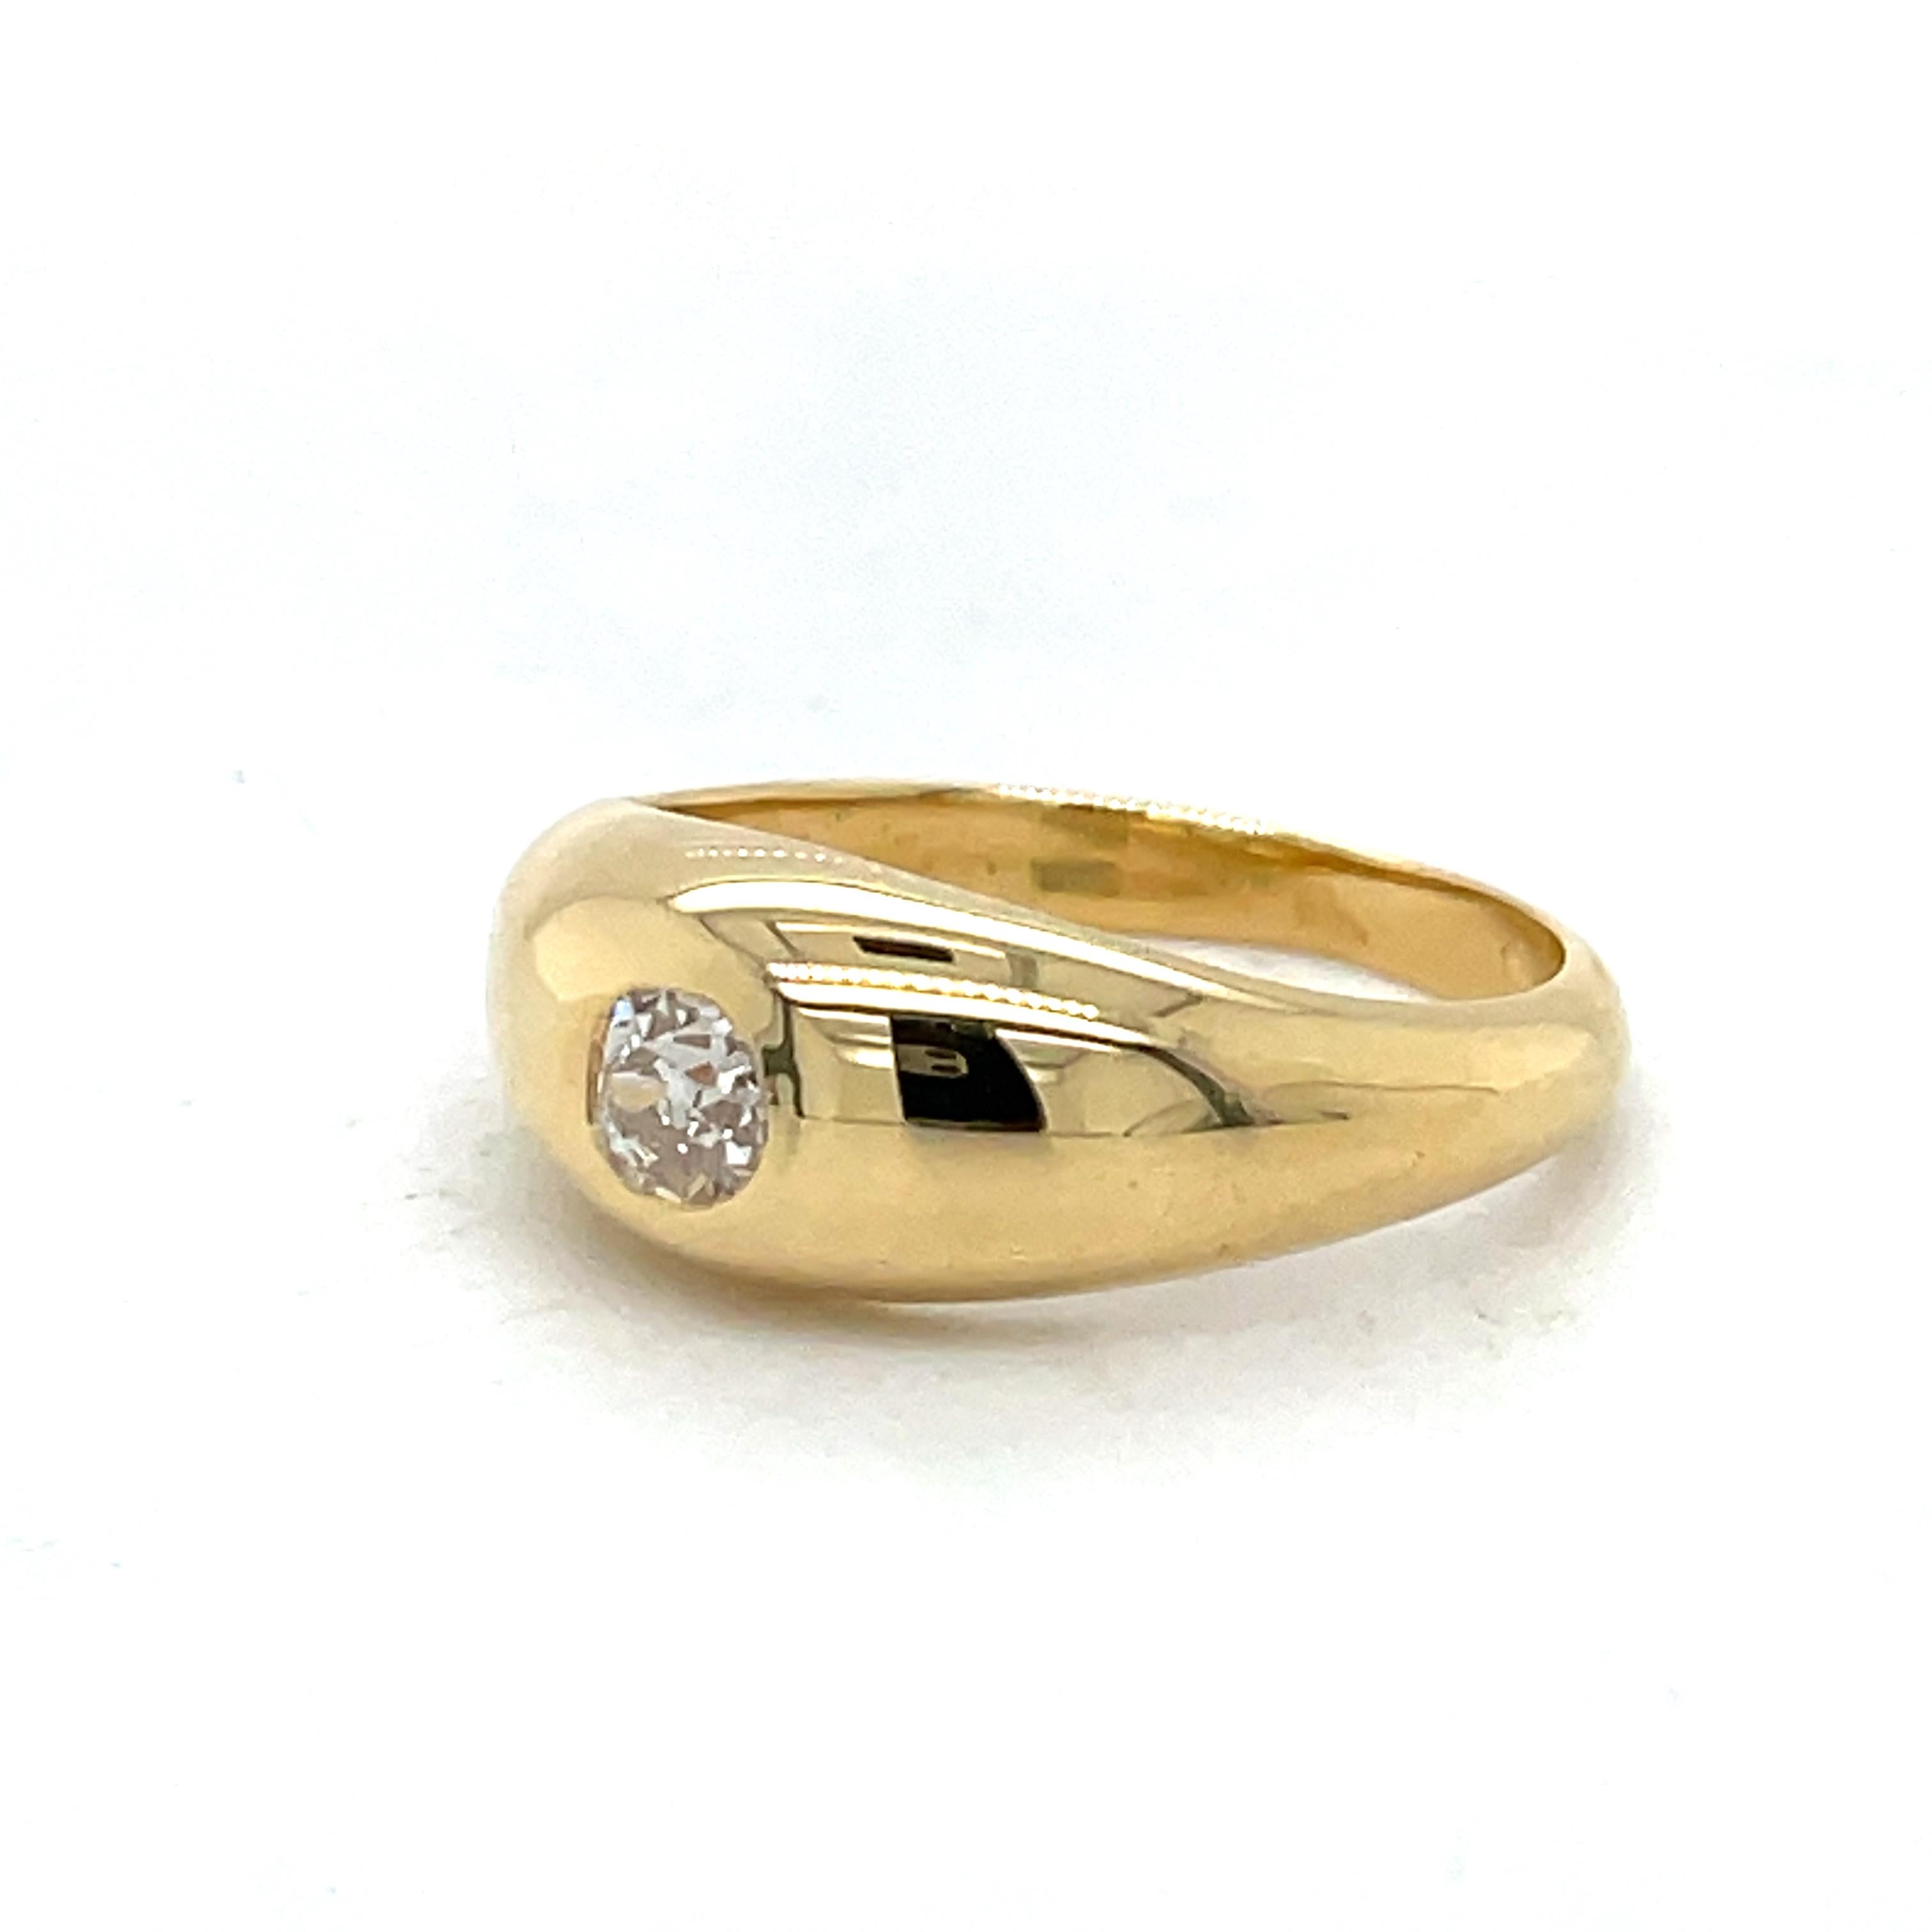 For Sale:  Dome Gold ring, Bezel set, 0.3CT Old Mine Diamond, 18k Gold, vintage stayle ring 8